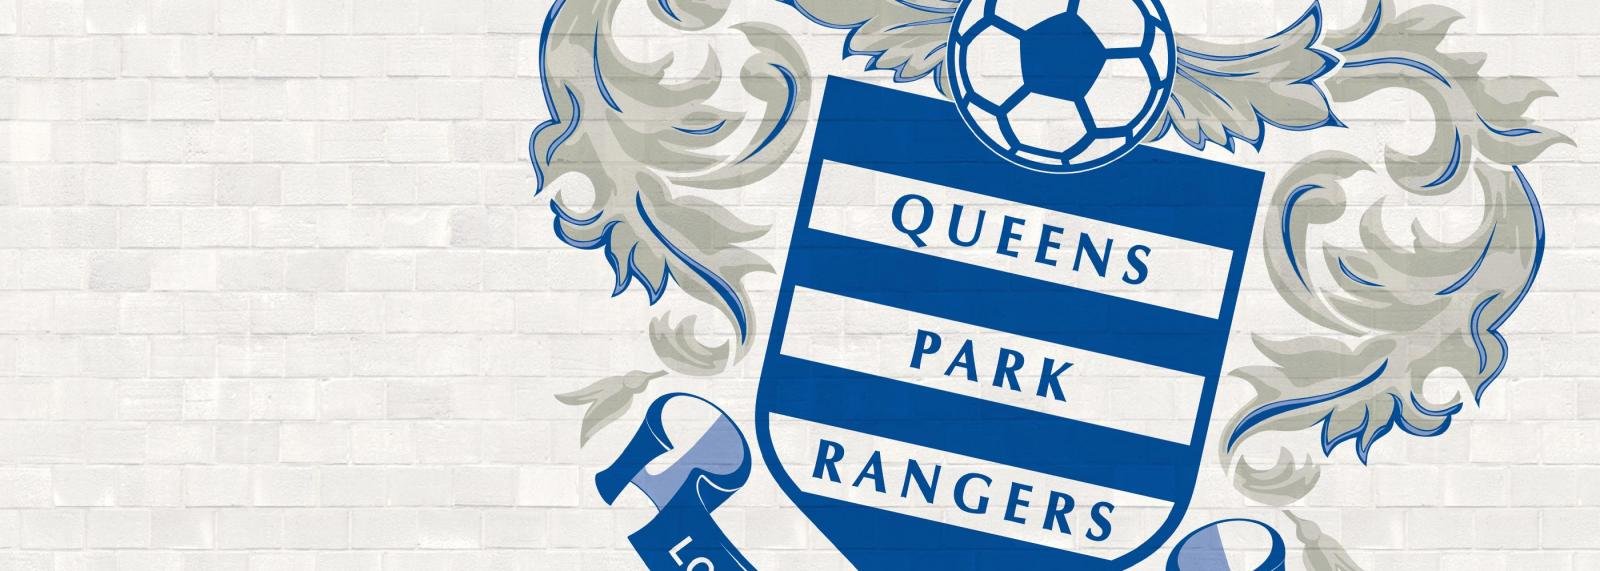 3 things we learnt from Queens Park Rangers’ 2015/16 season